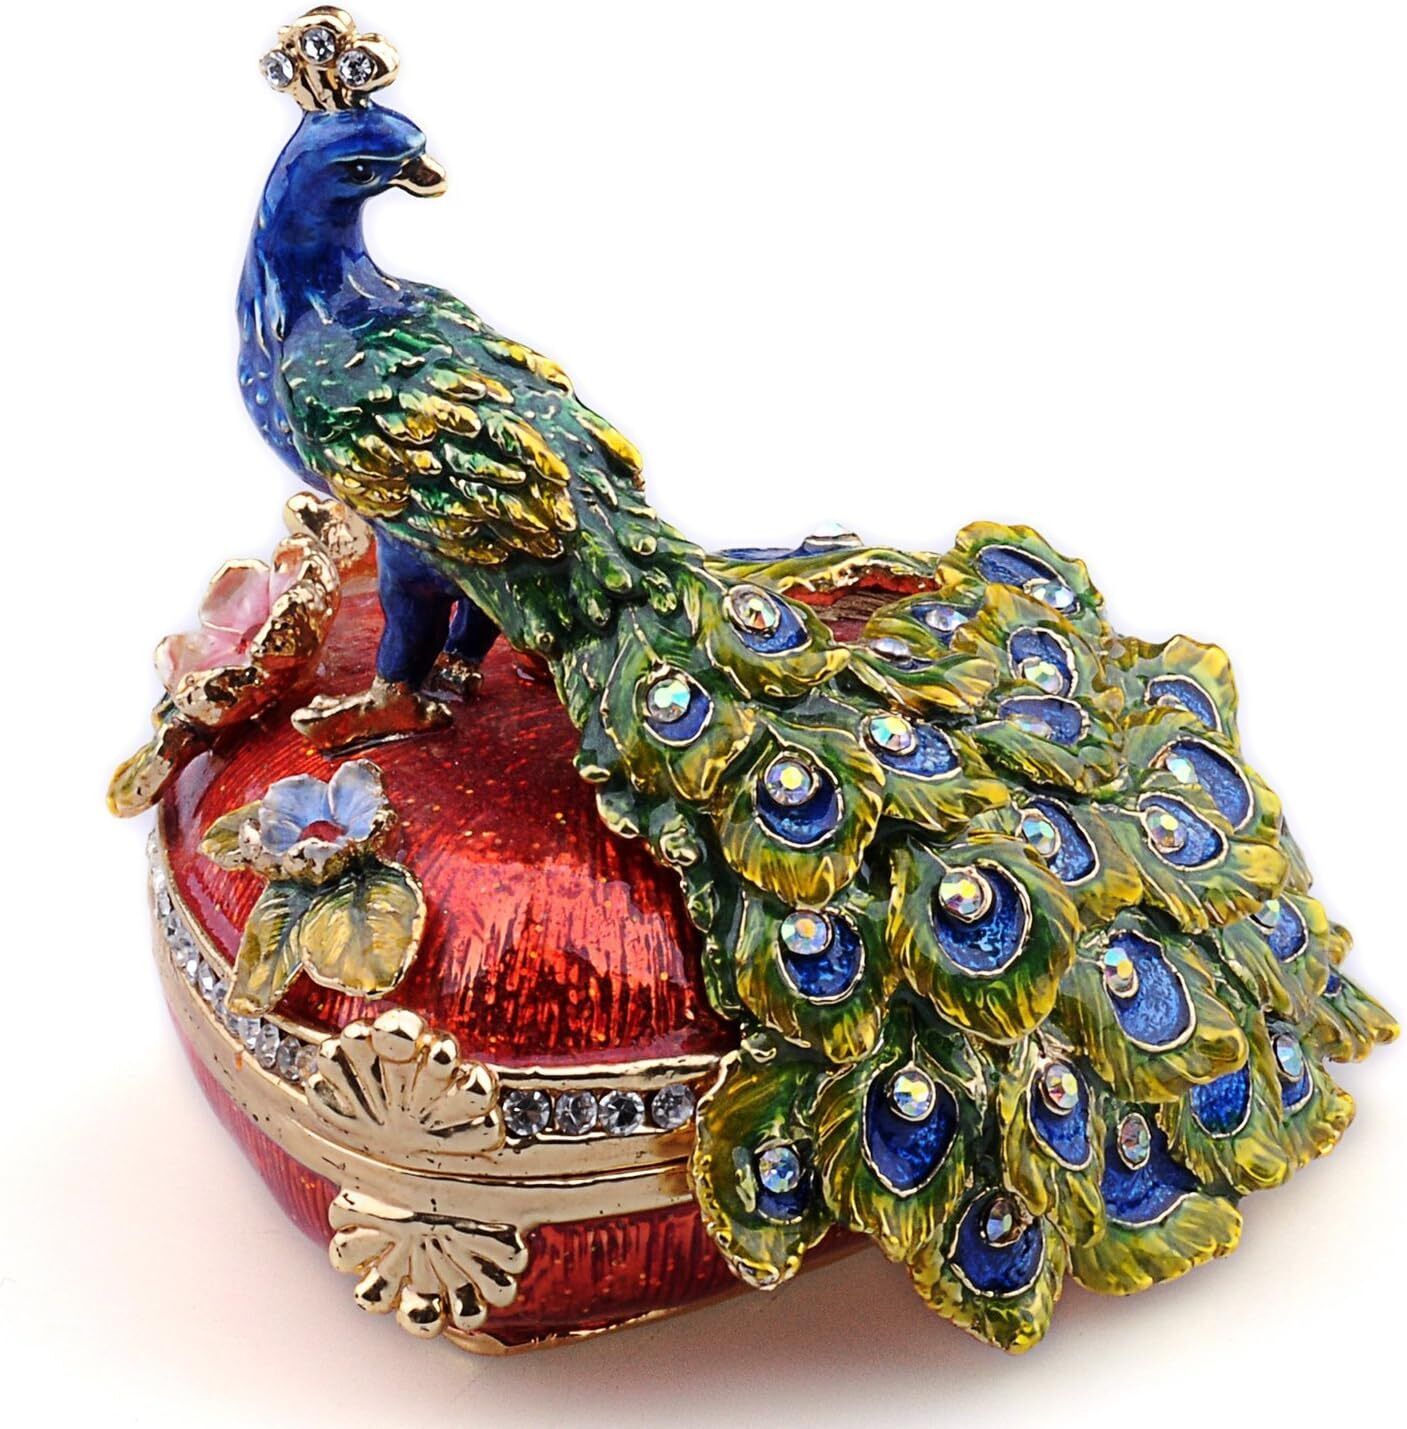 Bejeweled Enameled Animal Trinket Box/Figurine Heart Shaped Peacock